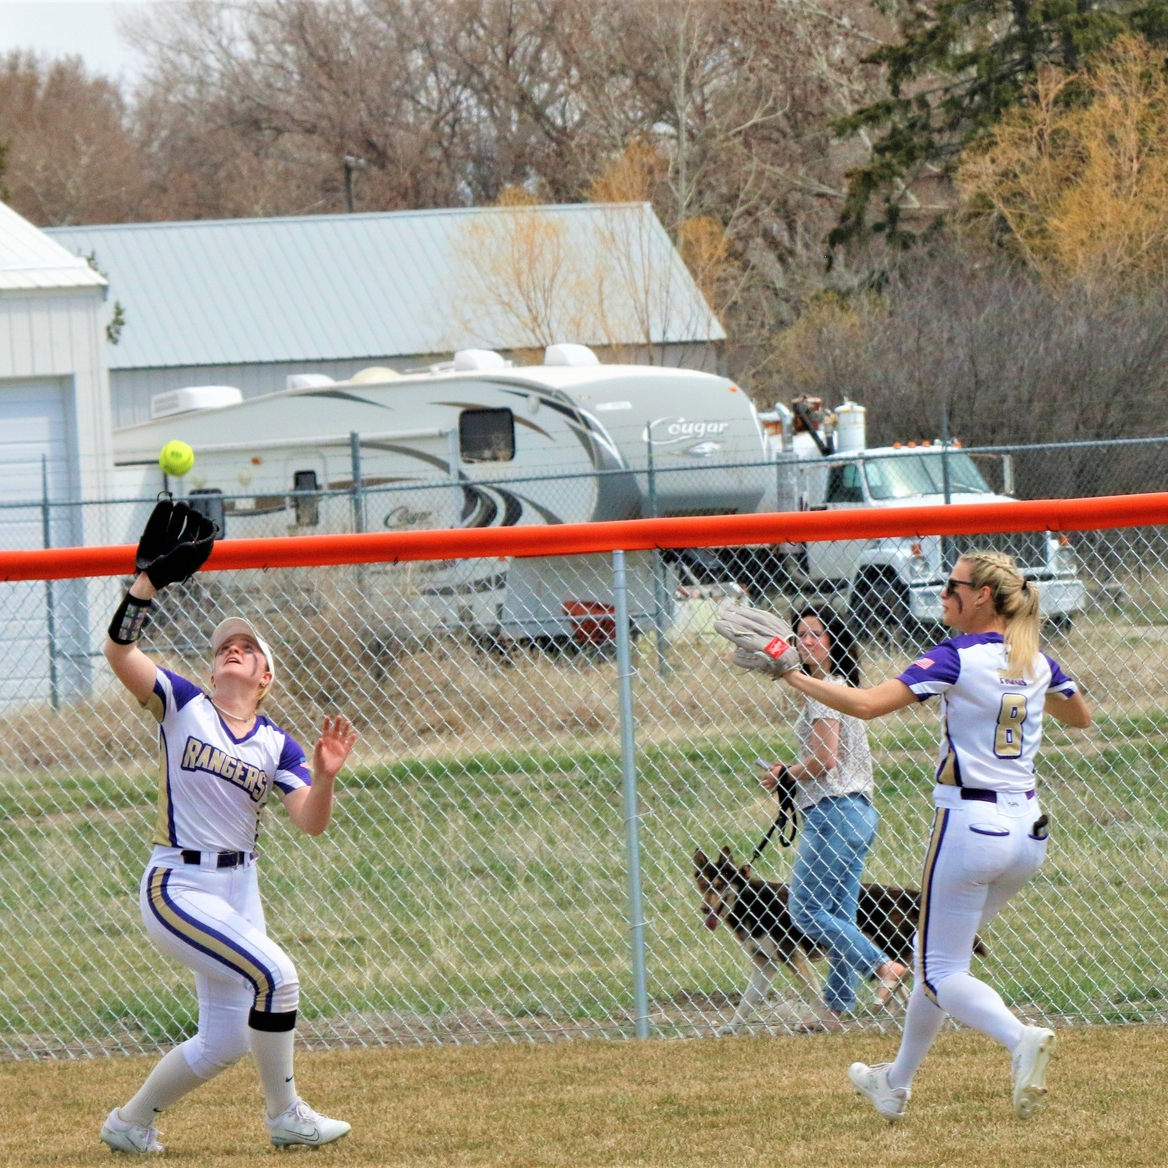 herder softball players run to catch a ball